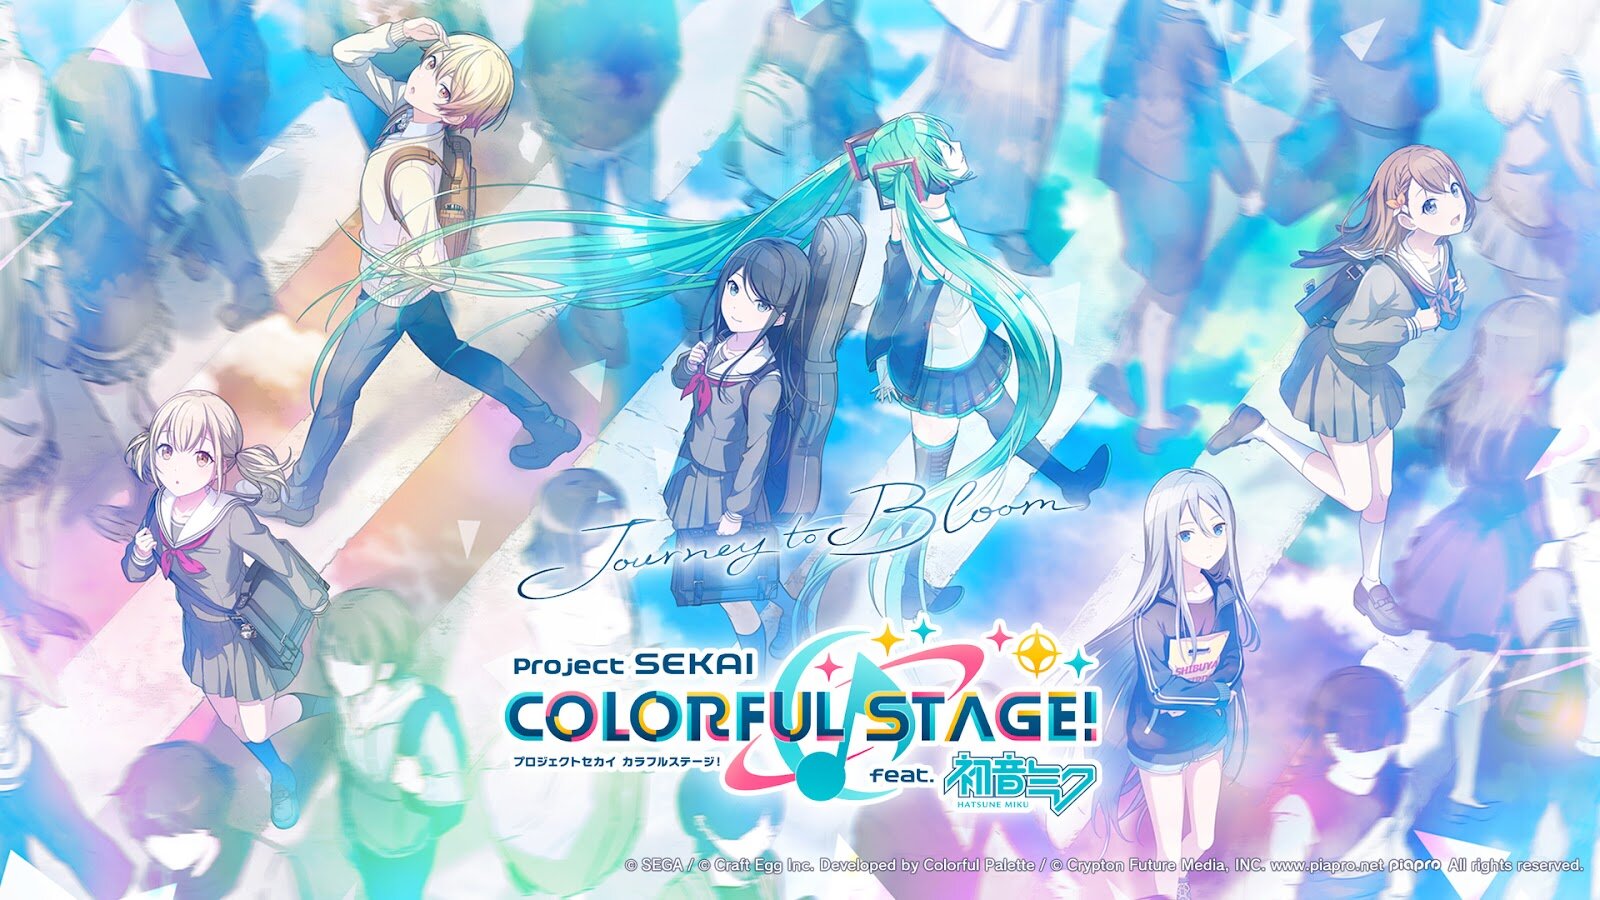 Скачать Project Sekai: Colorful Stage 3.3.1 для Android